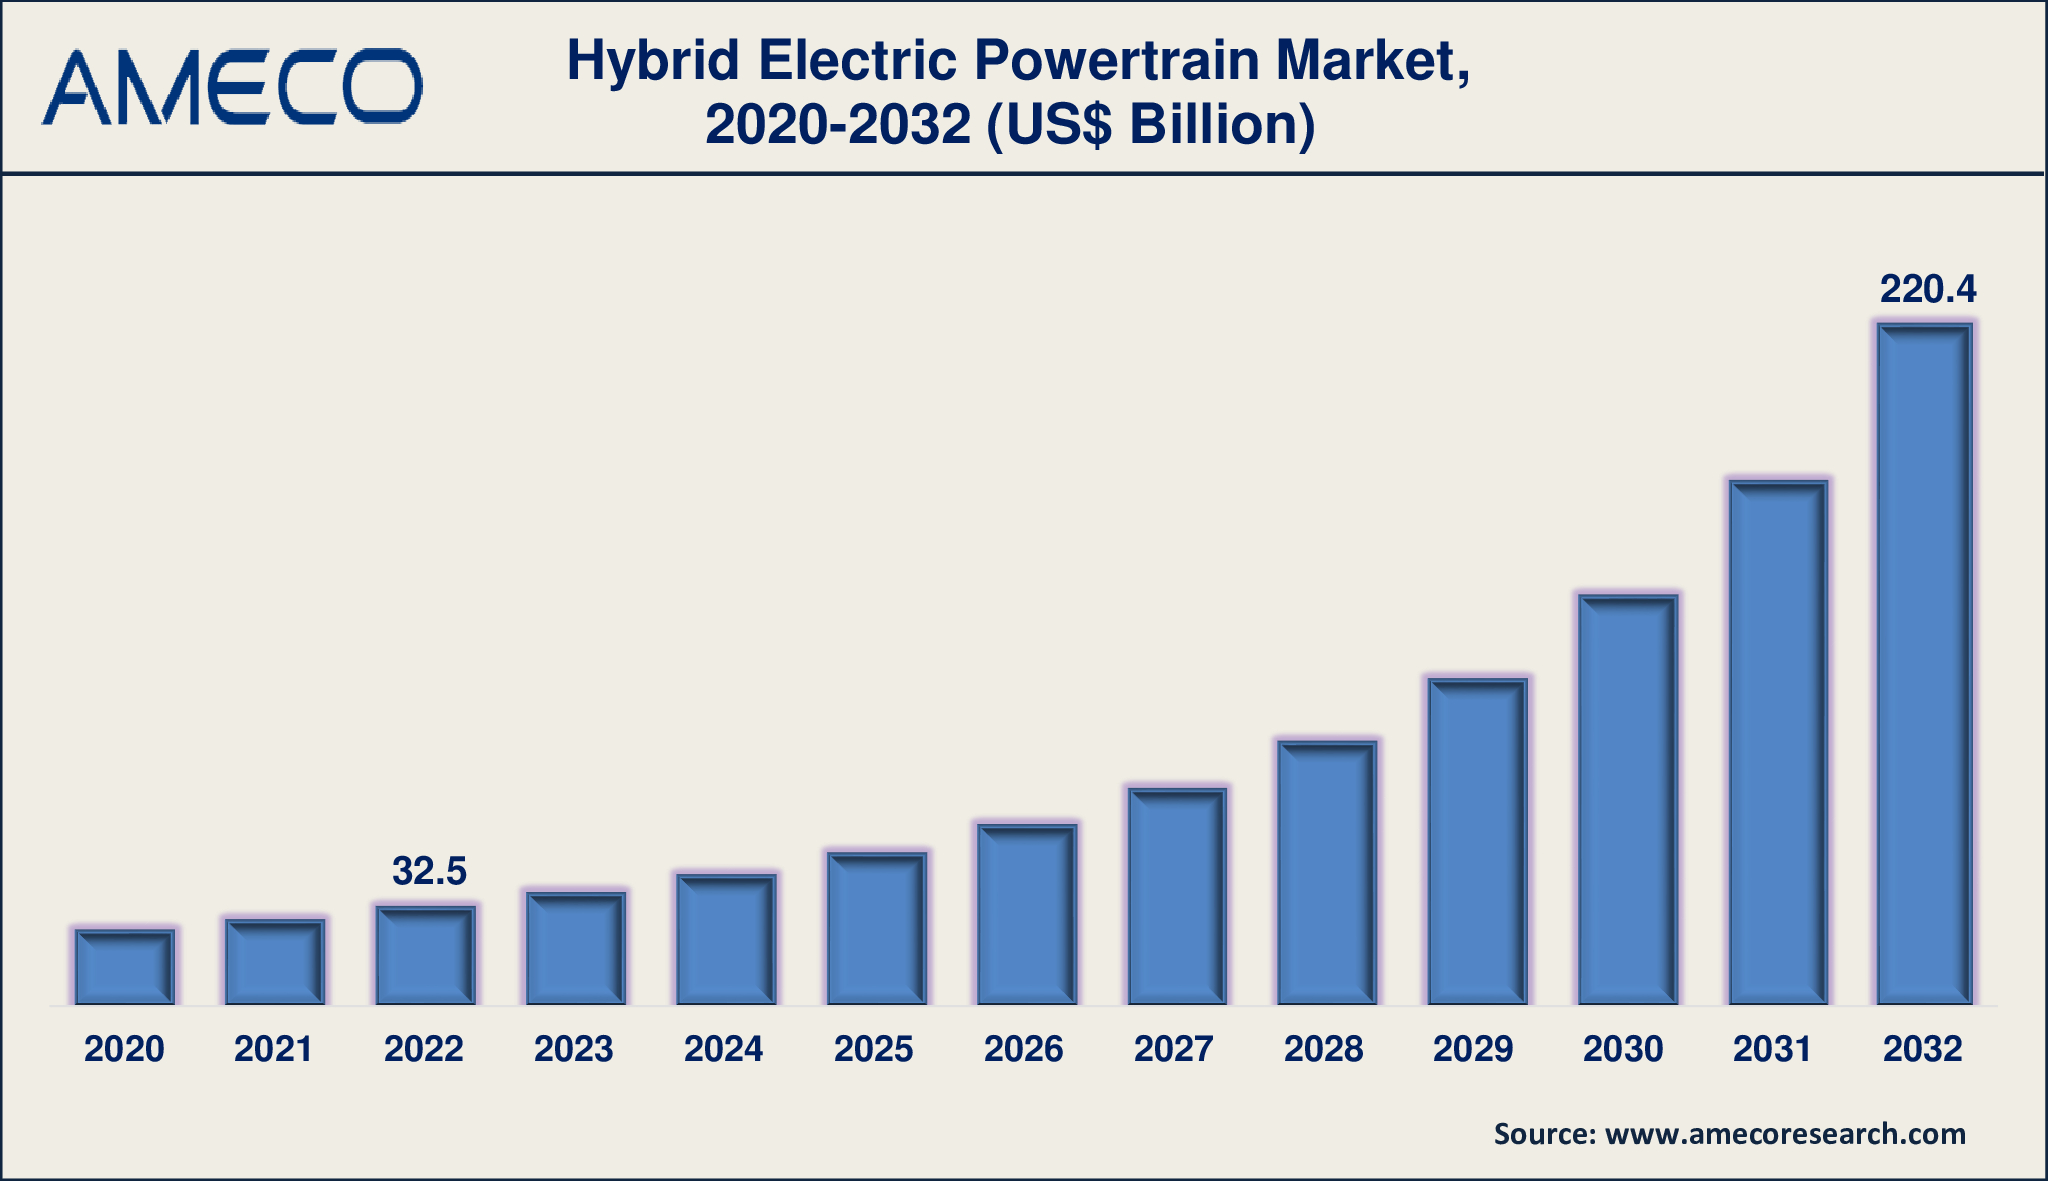 Hybrid Electric Powertrain Market Dynamics